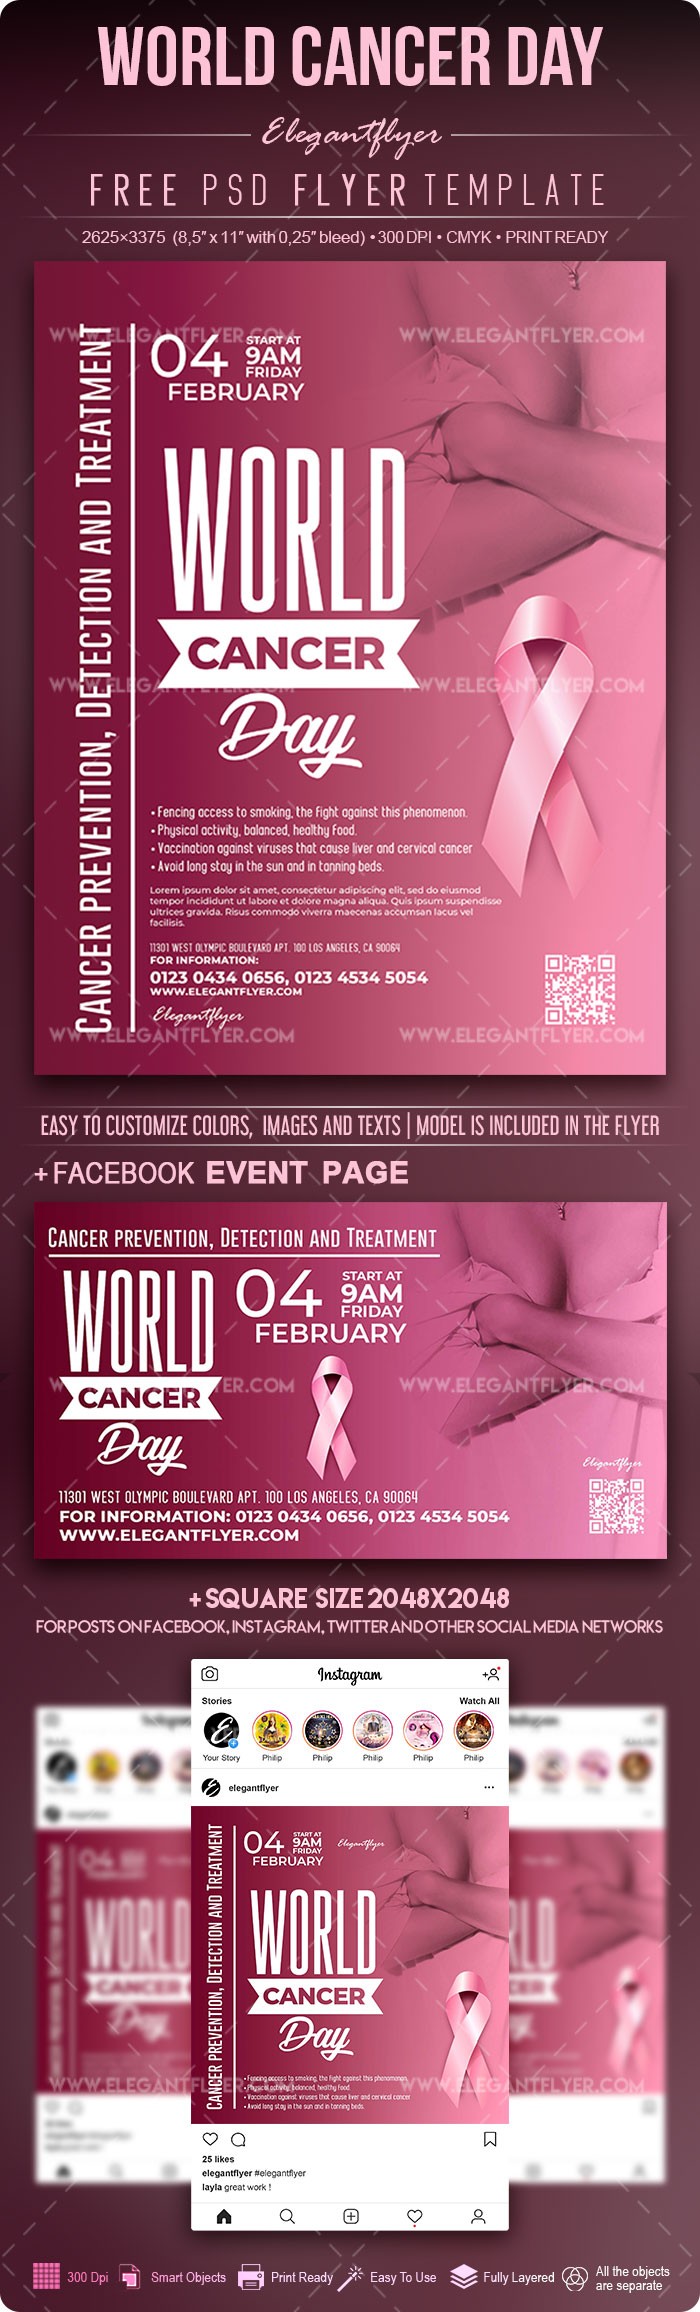 World Cancer Day by ElegantFlyer